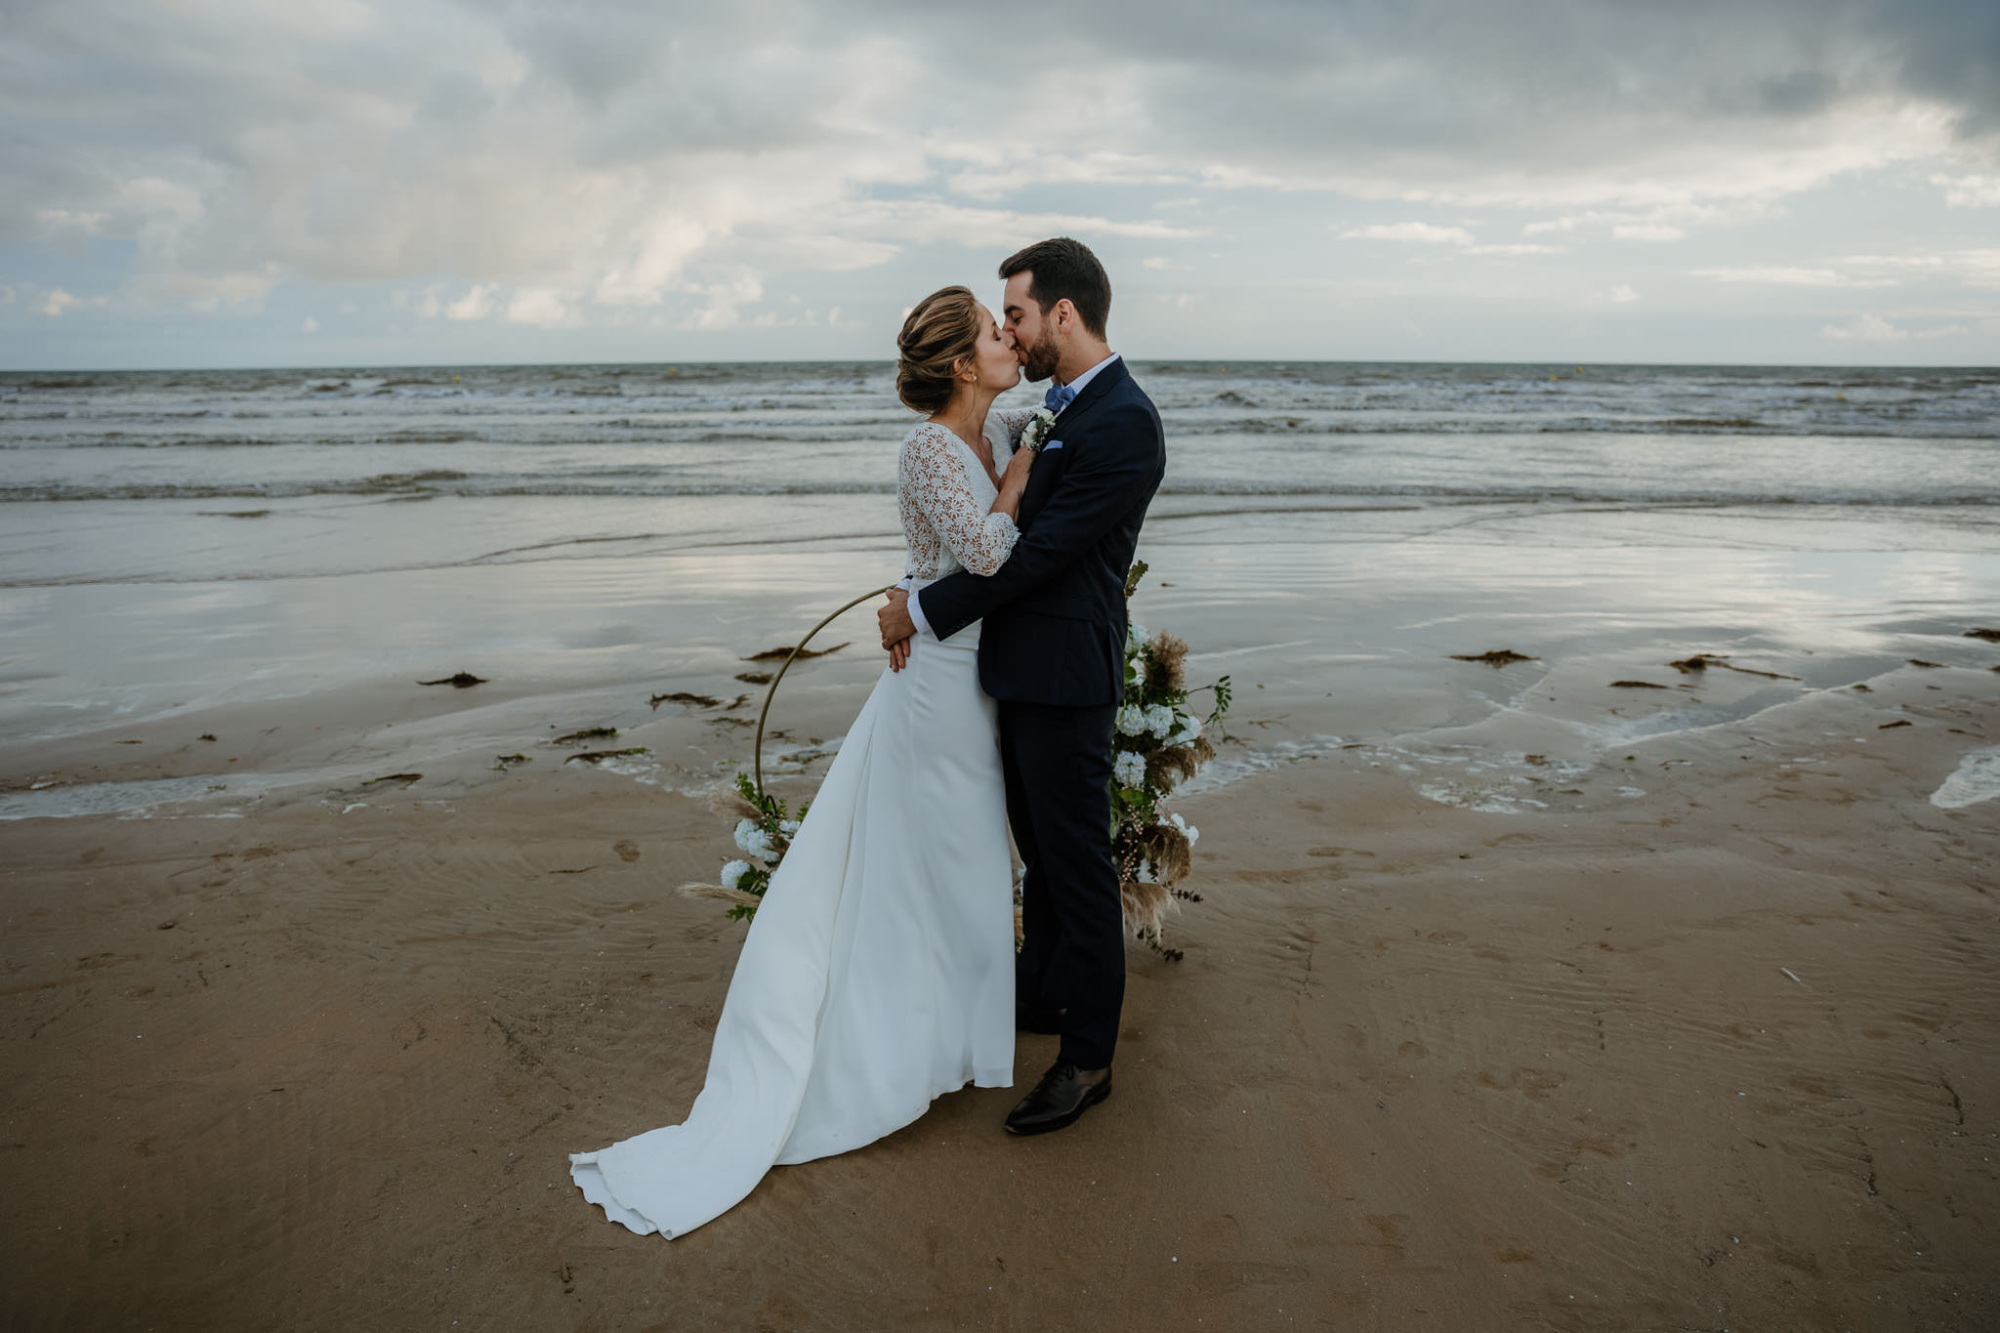 photographe nantes mariage a la mer sur la plage